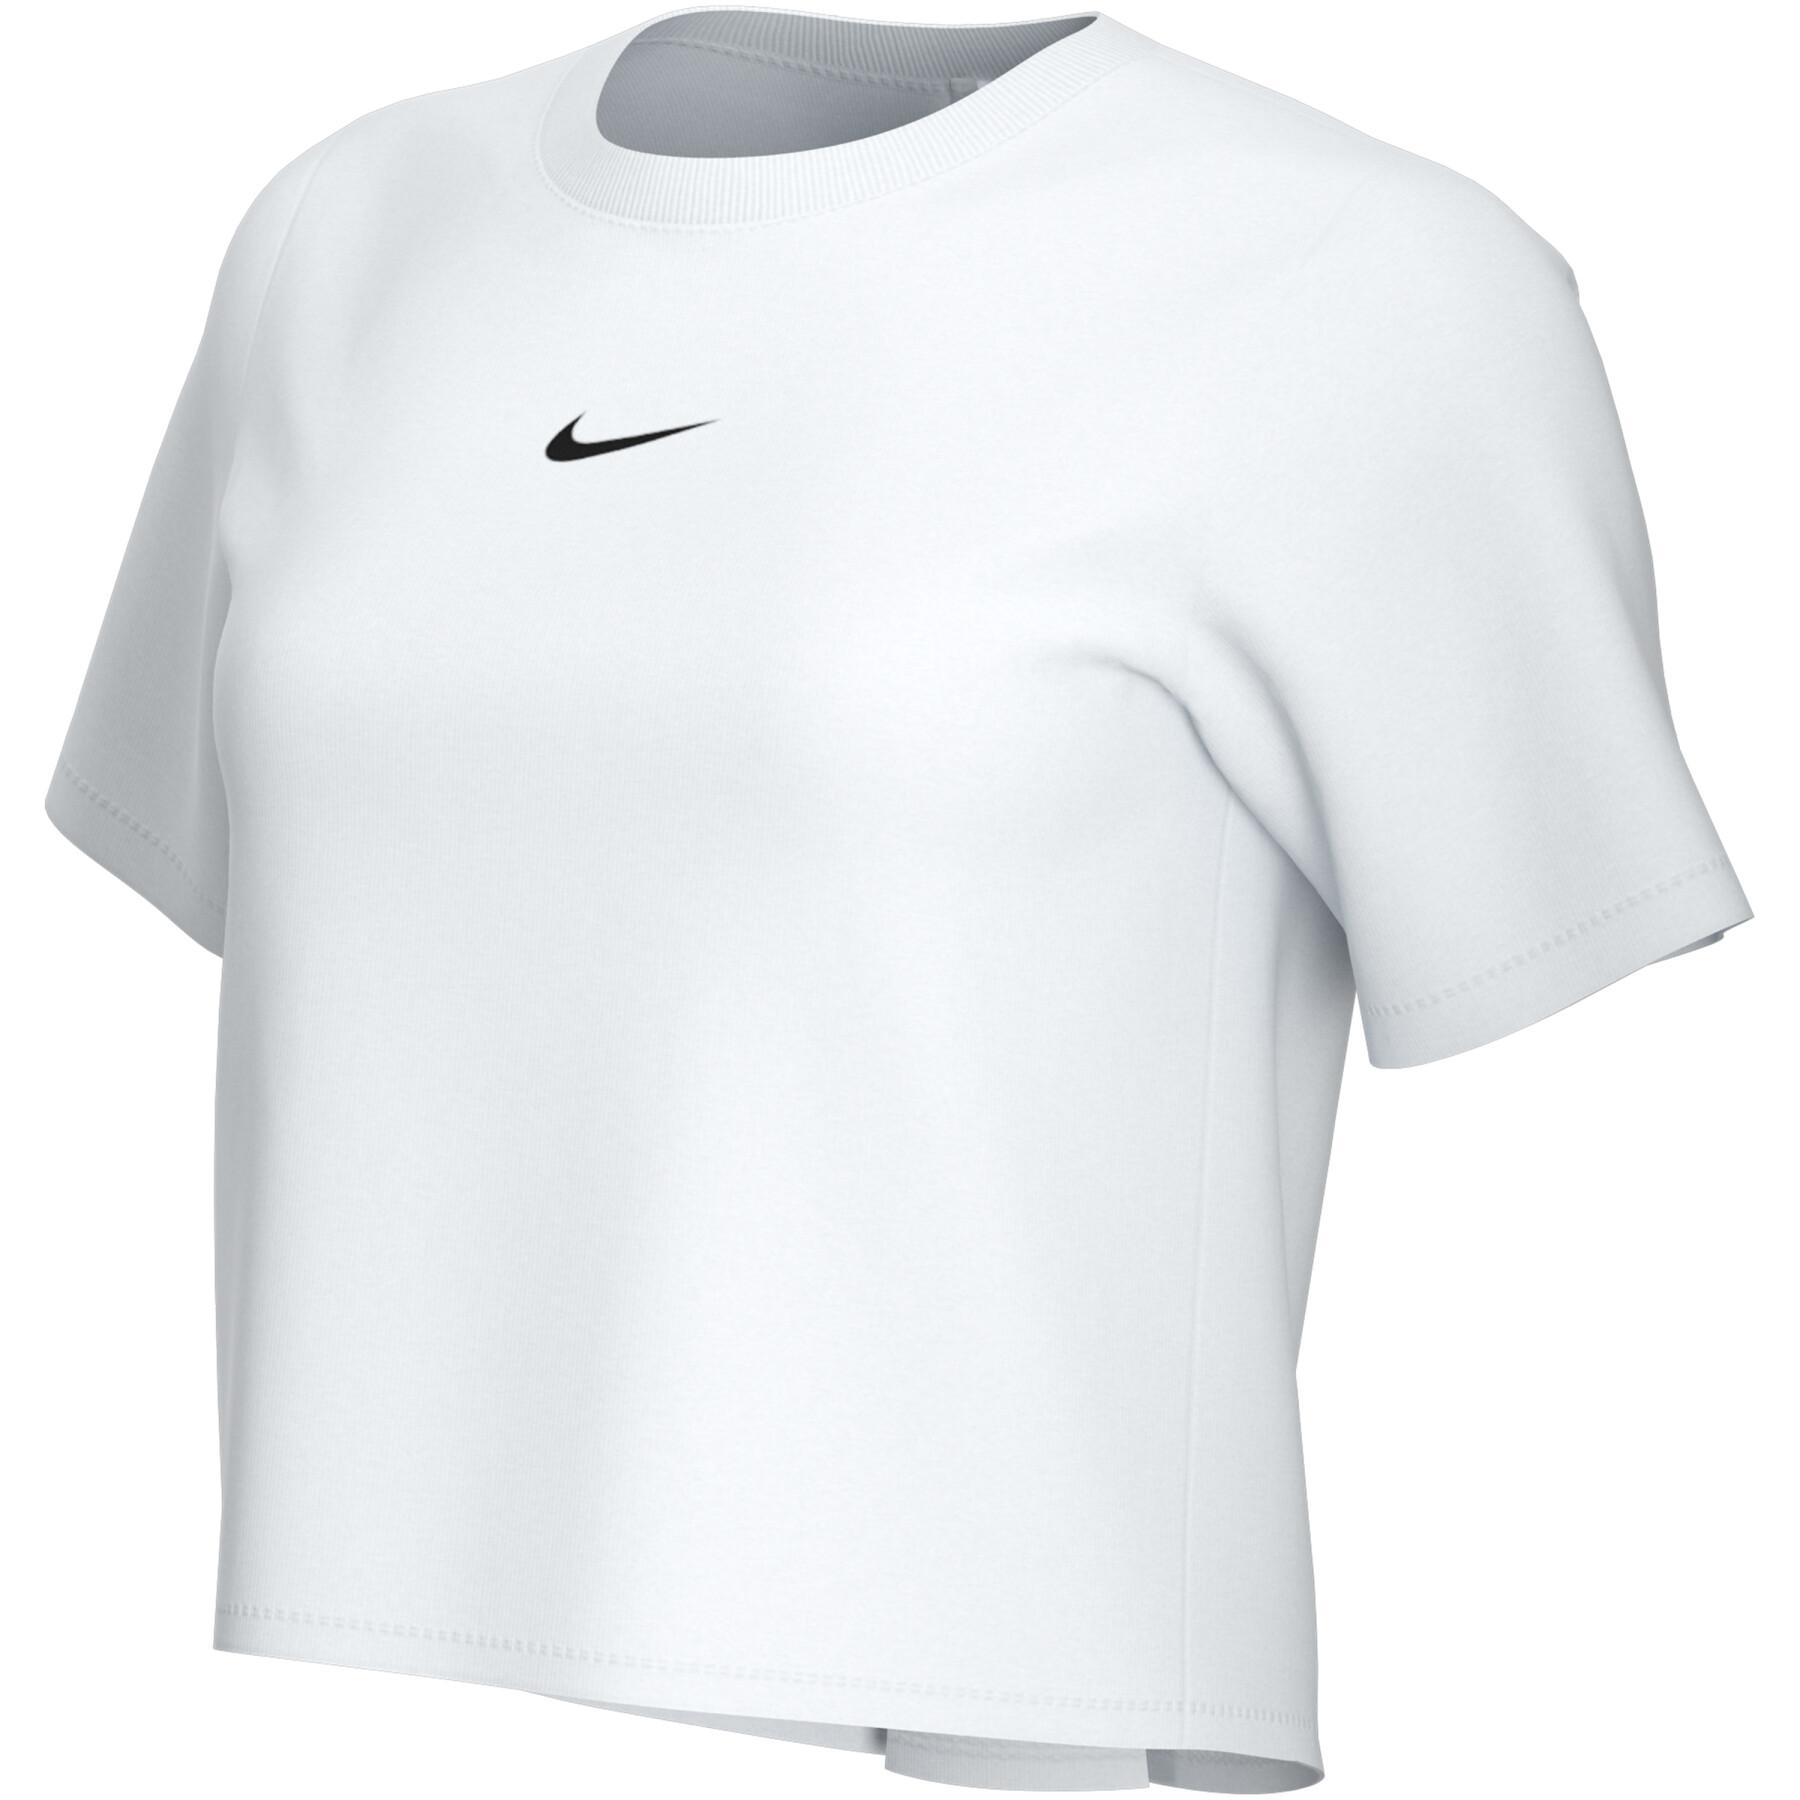 Women's T-shirt Nike court advantage